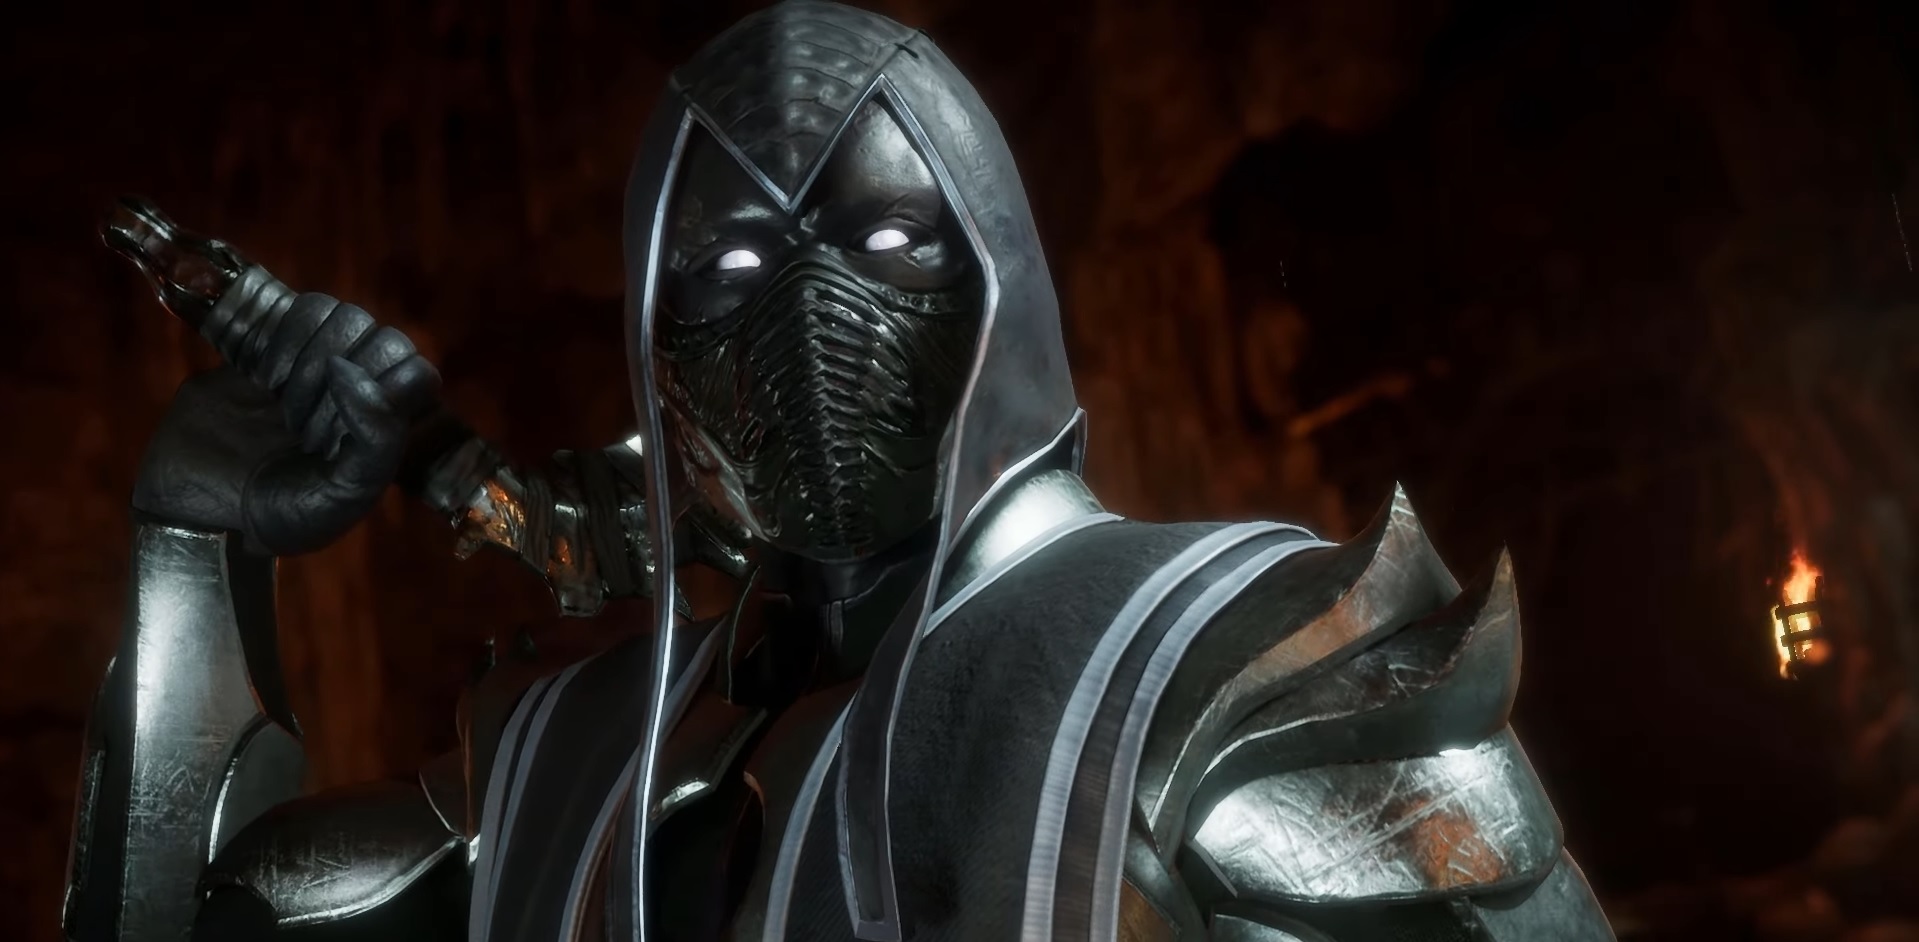 A screenshot of Noob Saibot in Mortal Kombat.